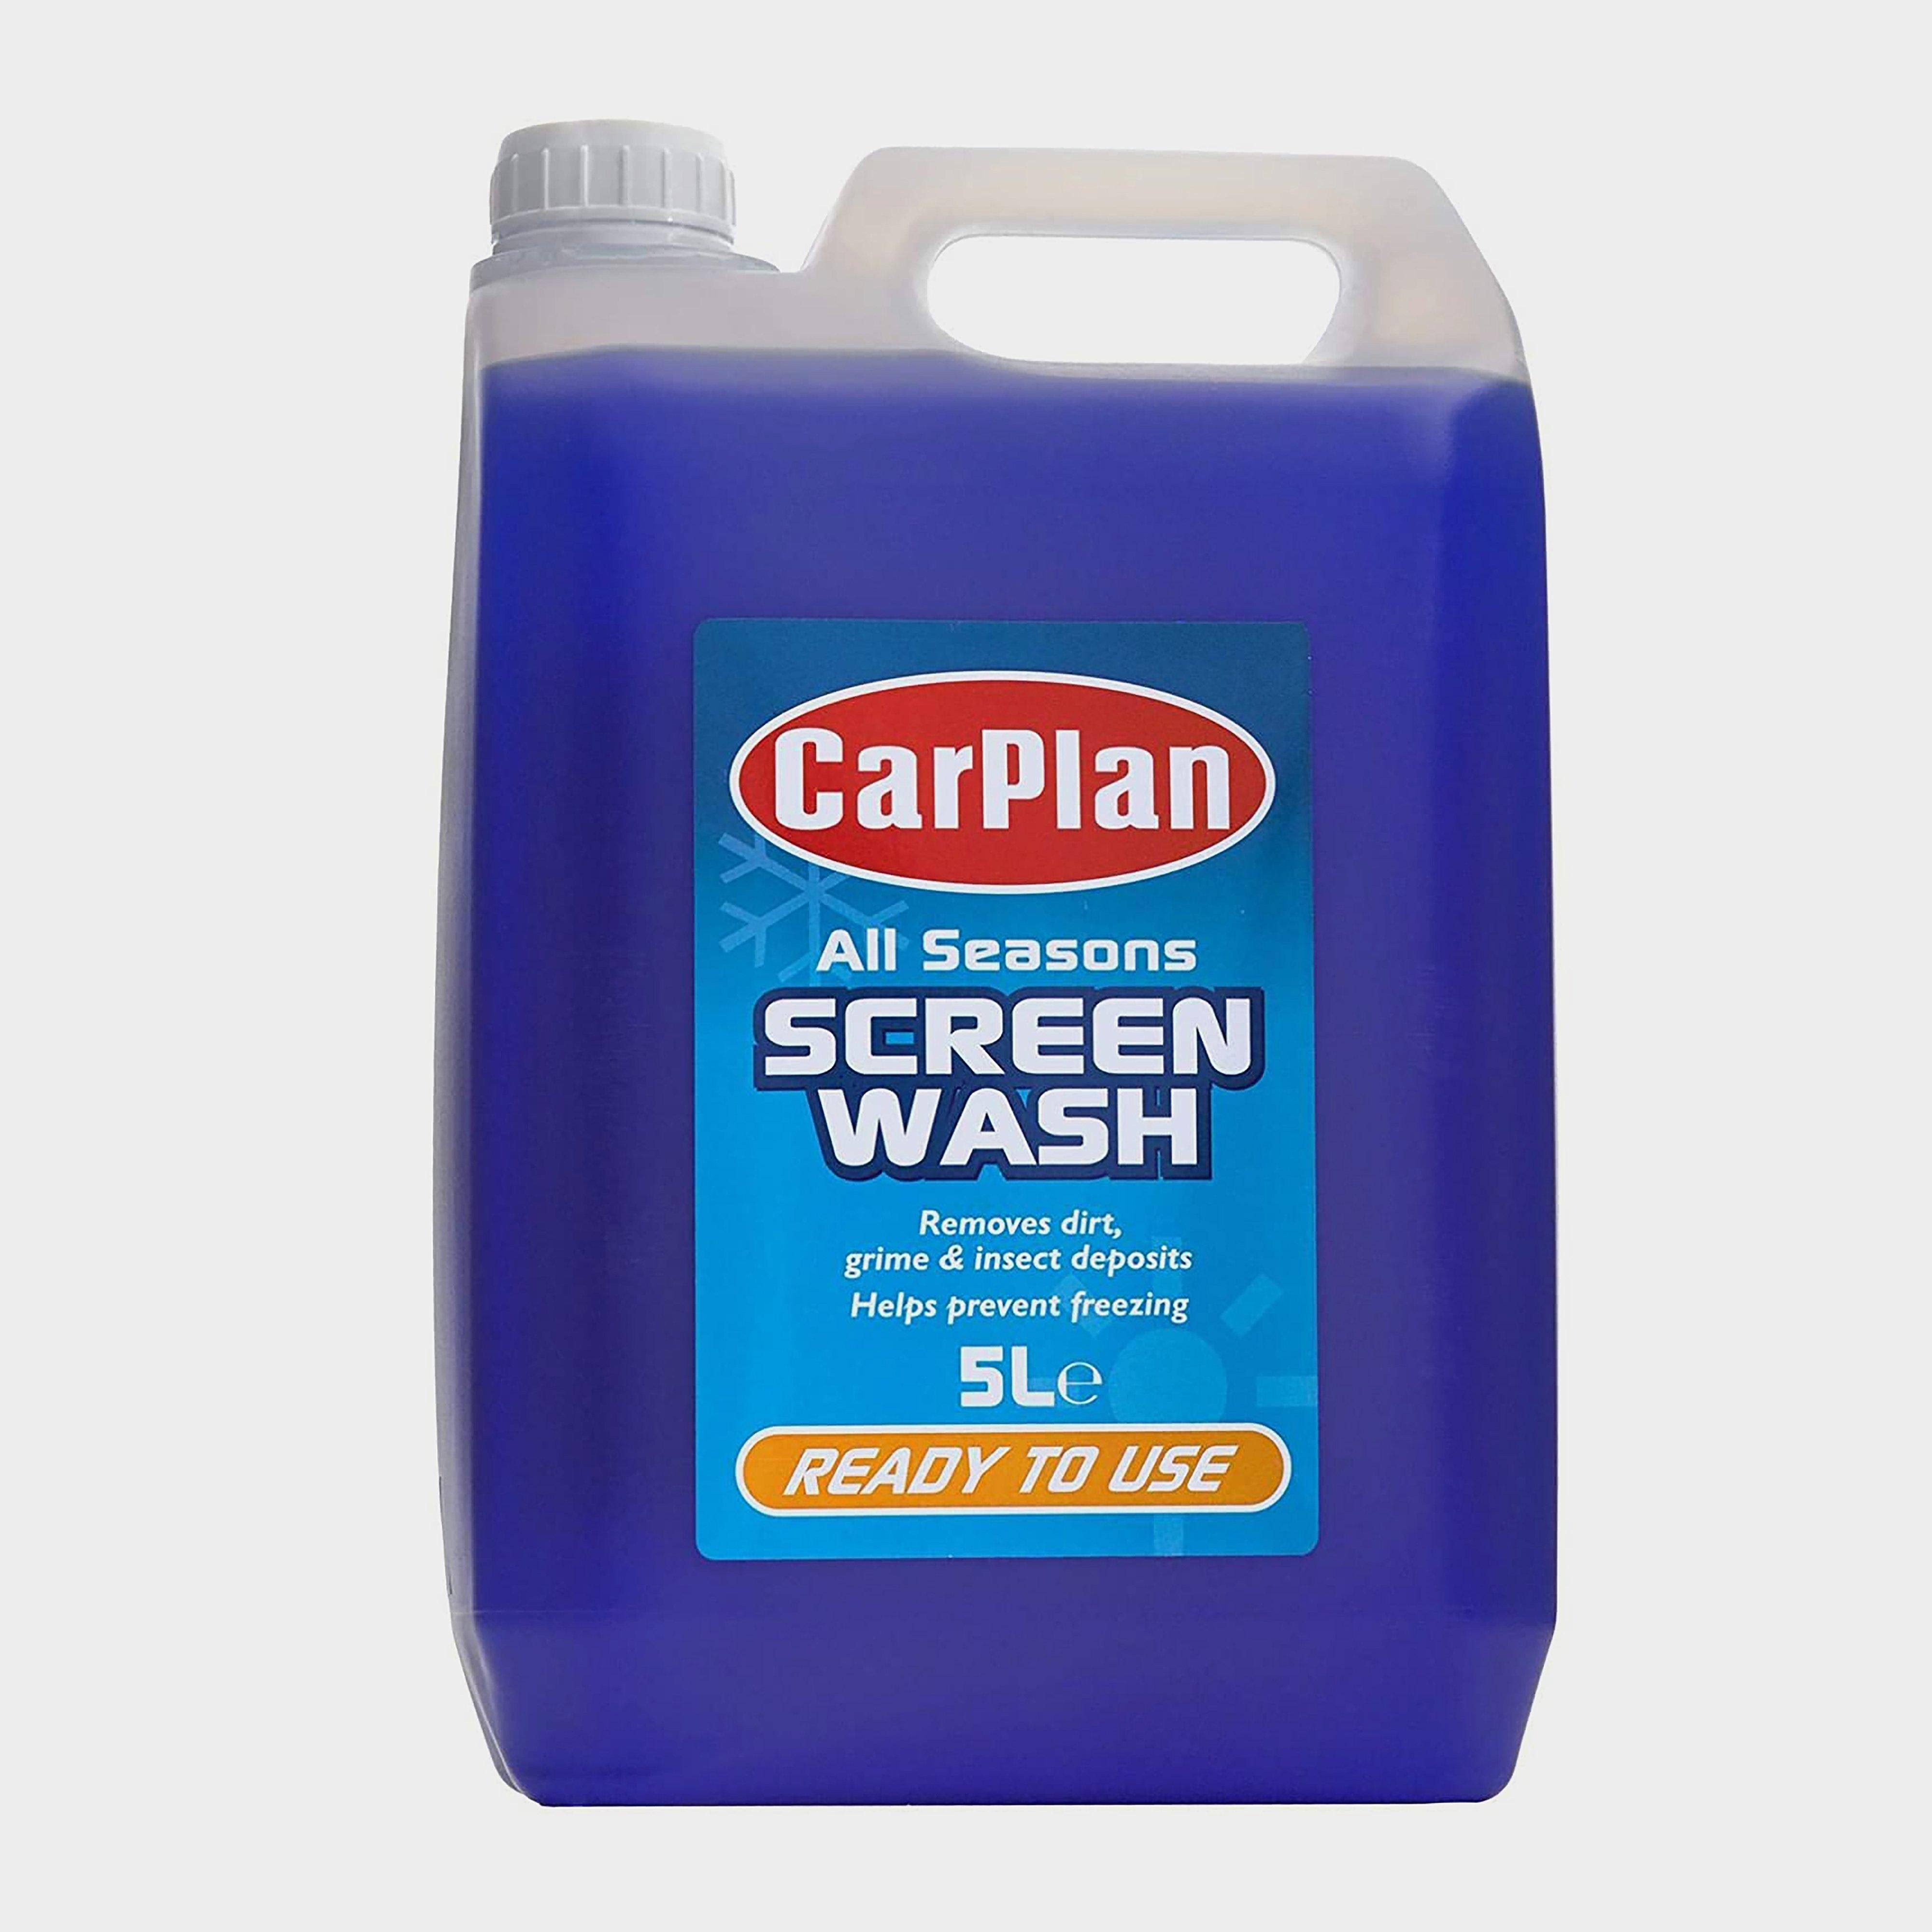 CarPlan All Seasons Screen Wash - 5L Ready Mixed